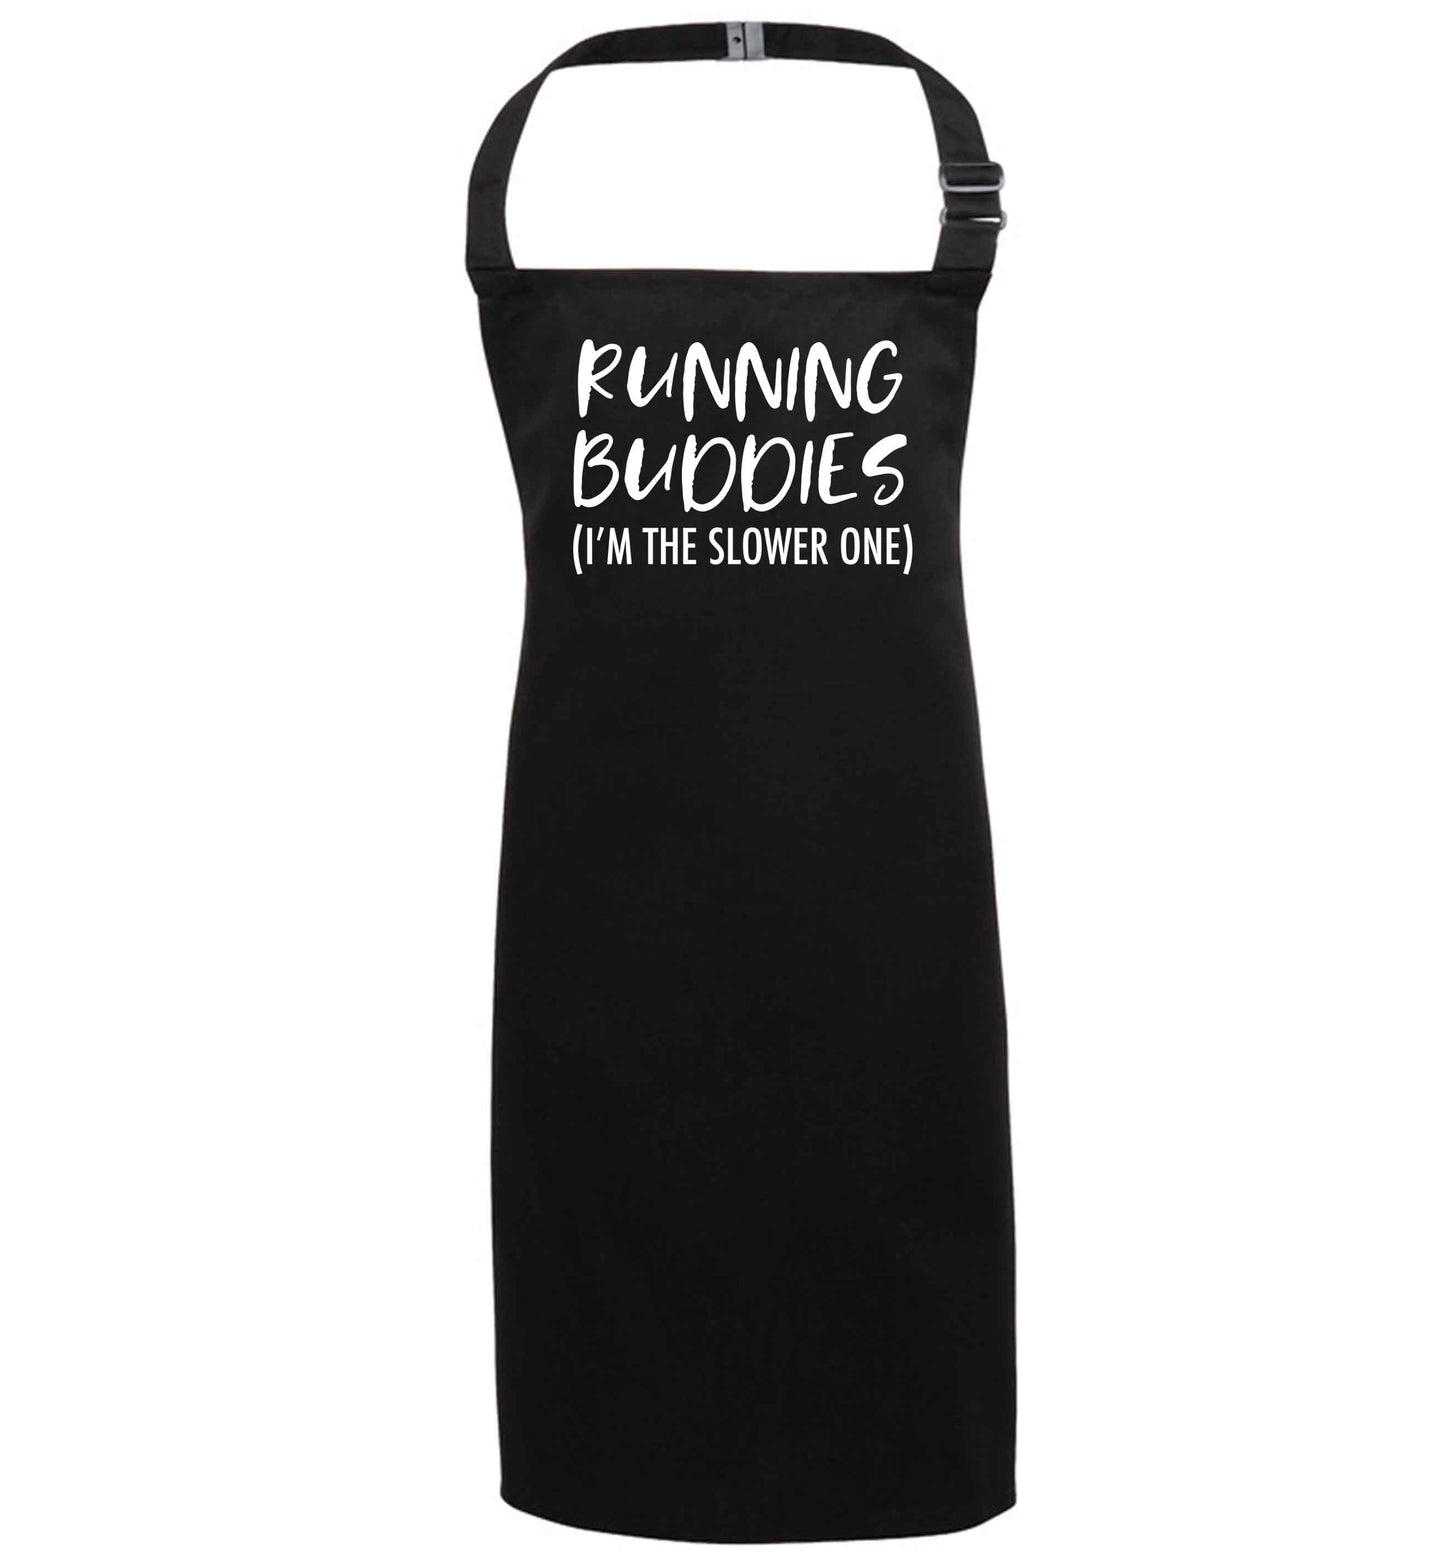 Running buddies (I'm the slower one) black apron 7-10 years